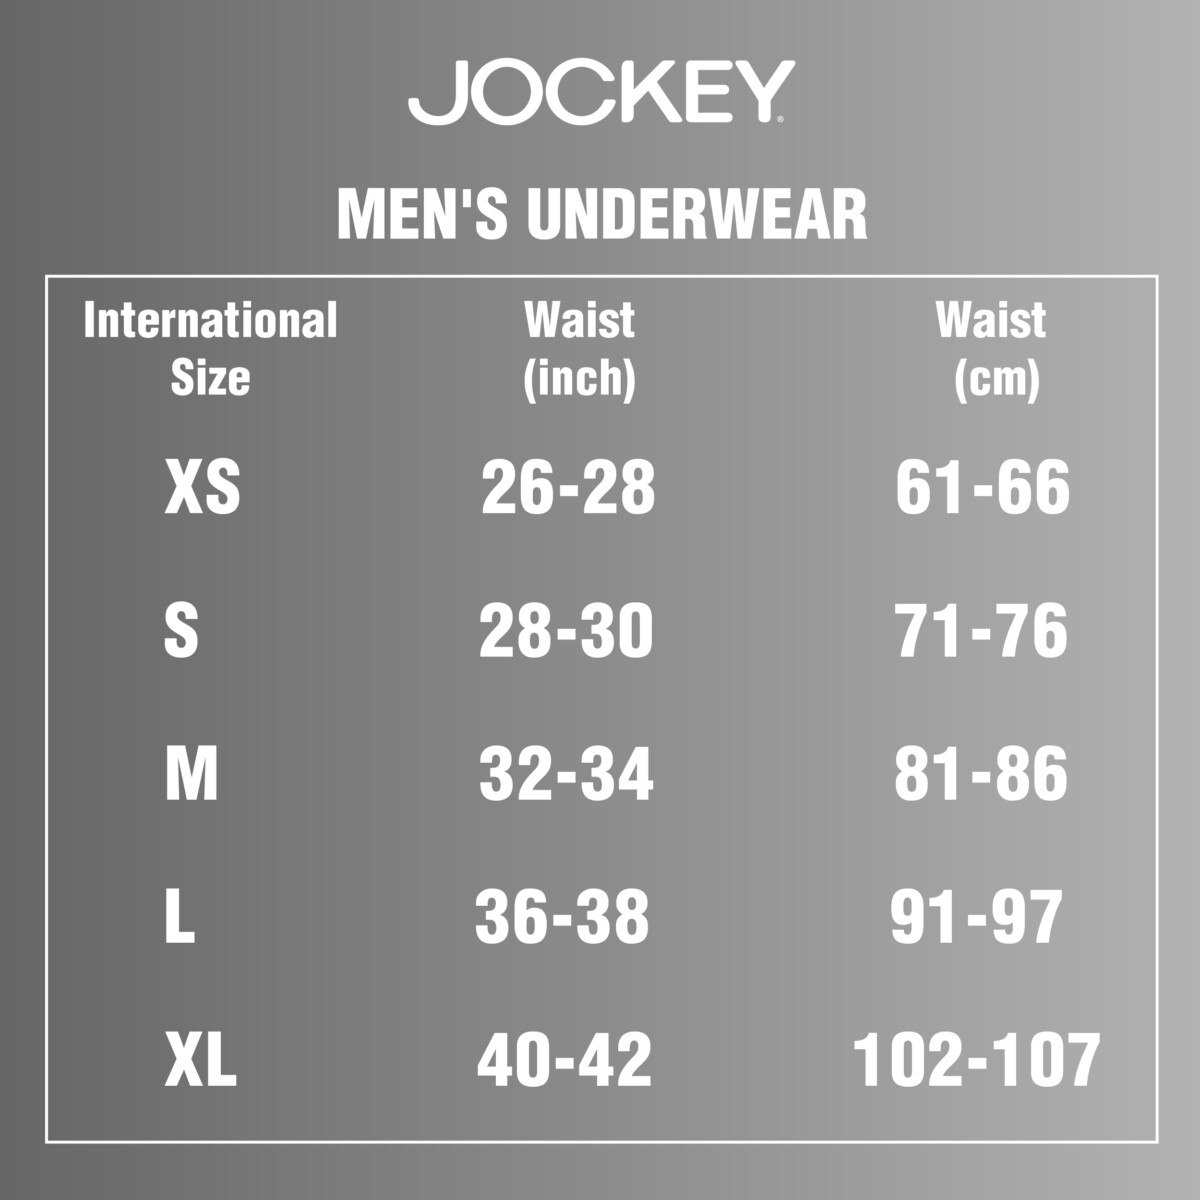 Jockey size chart - International Underwear